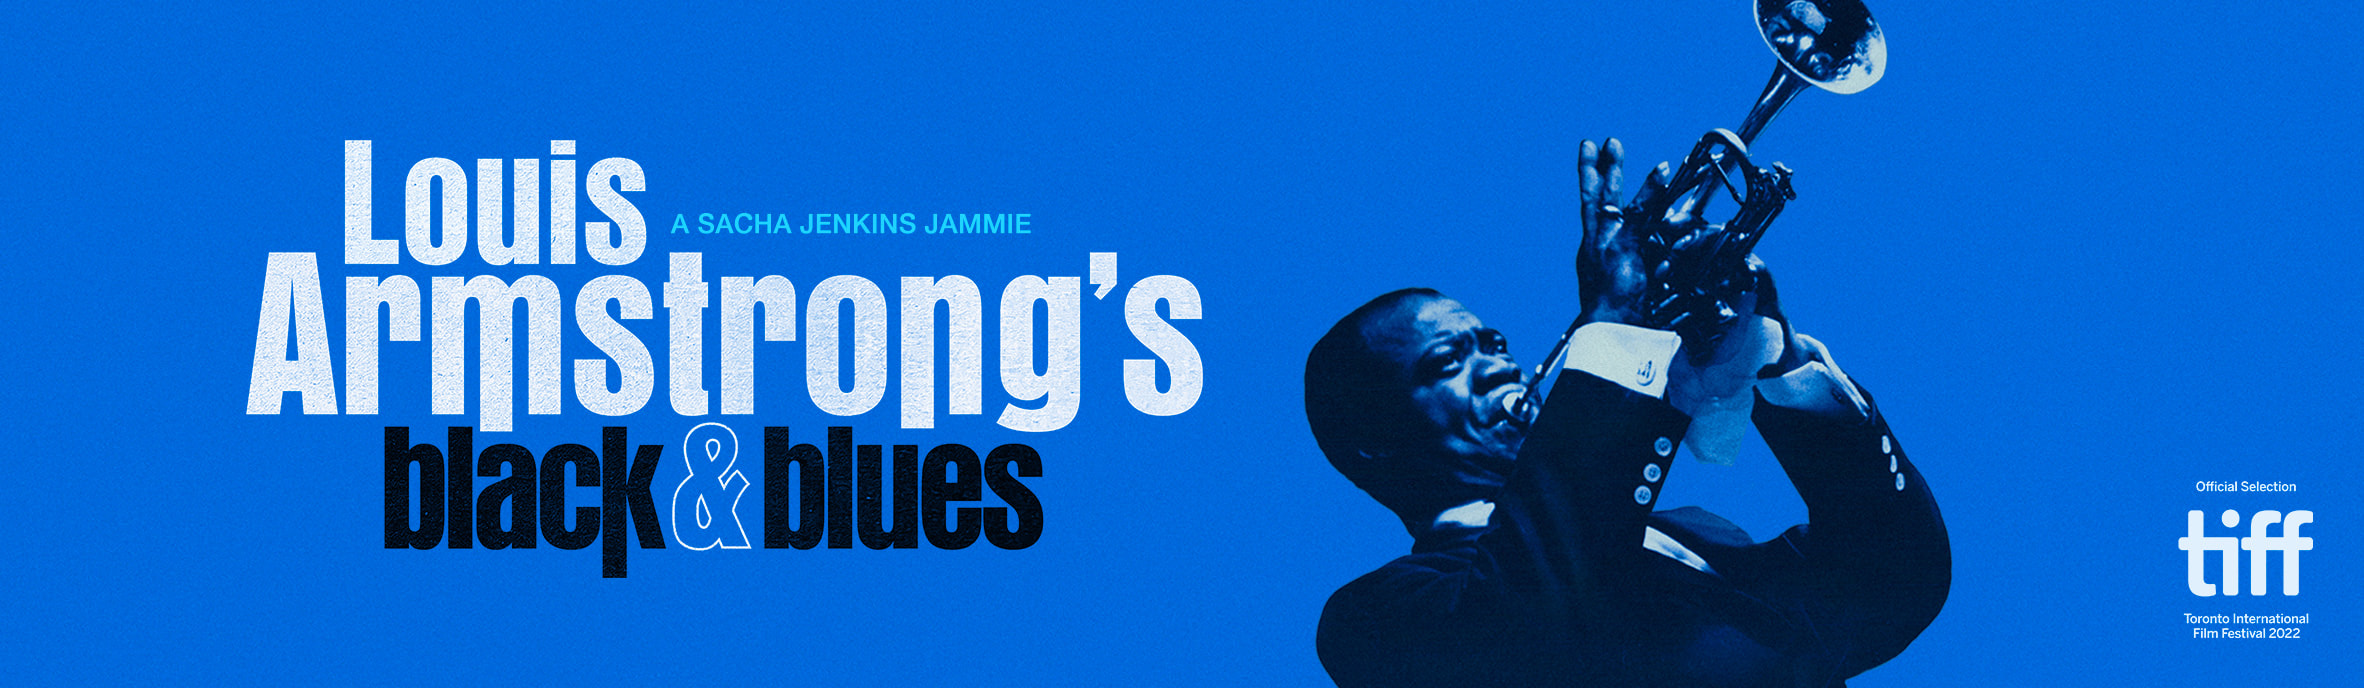 Louis Armstrong's Black & Blues - Apple TV+ Press